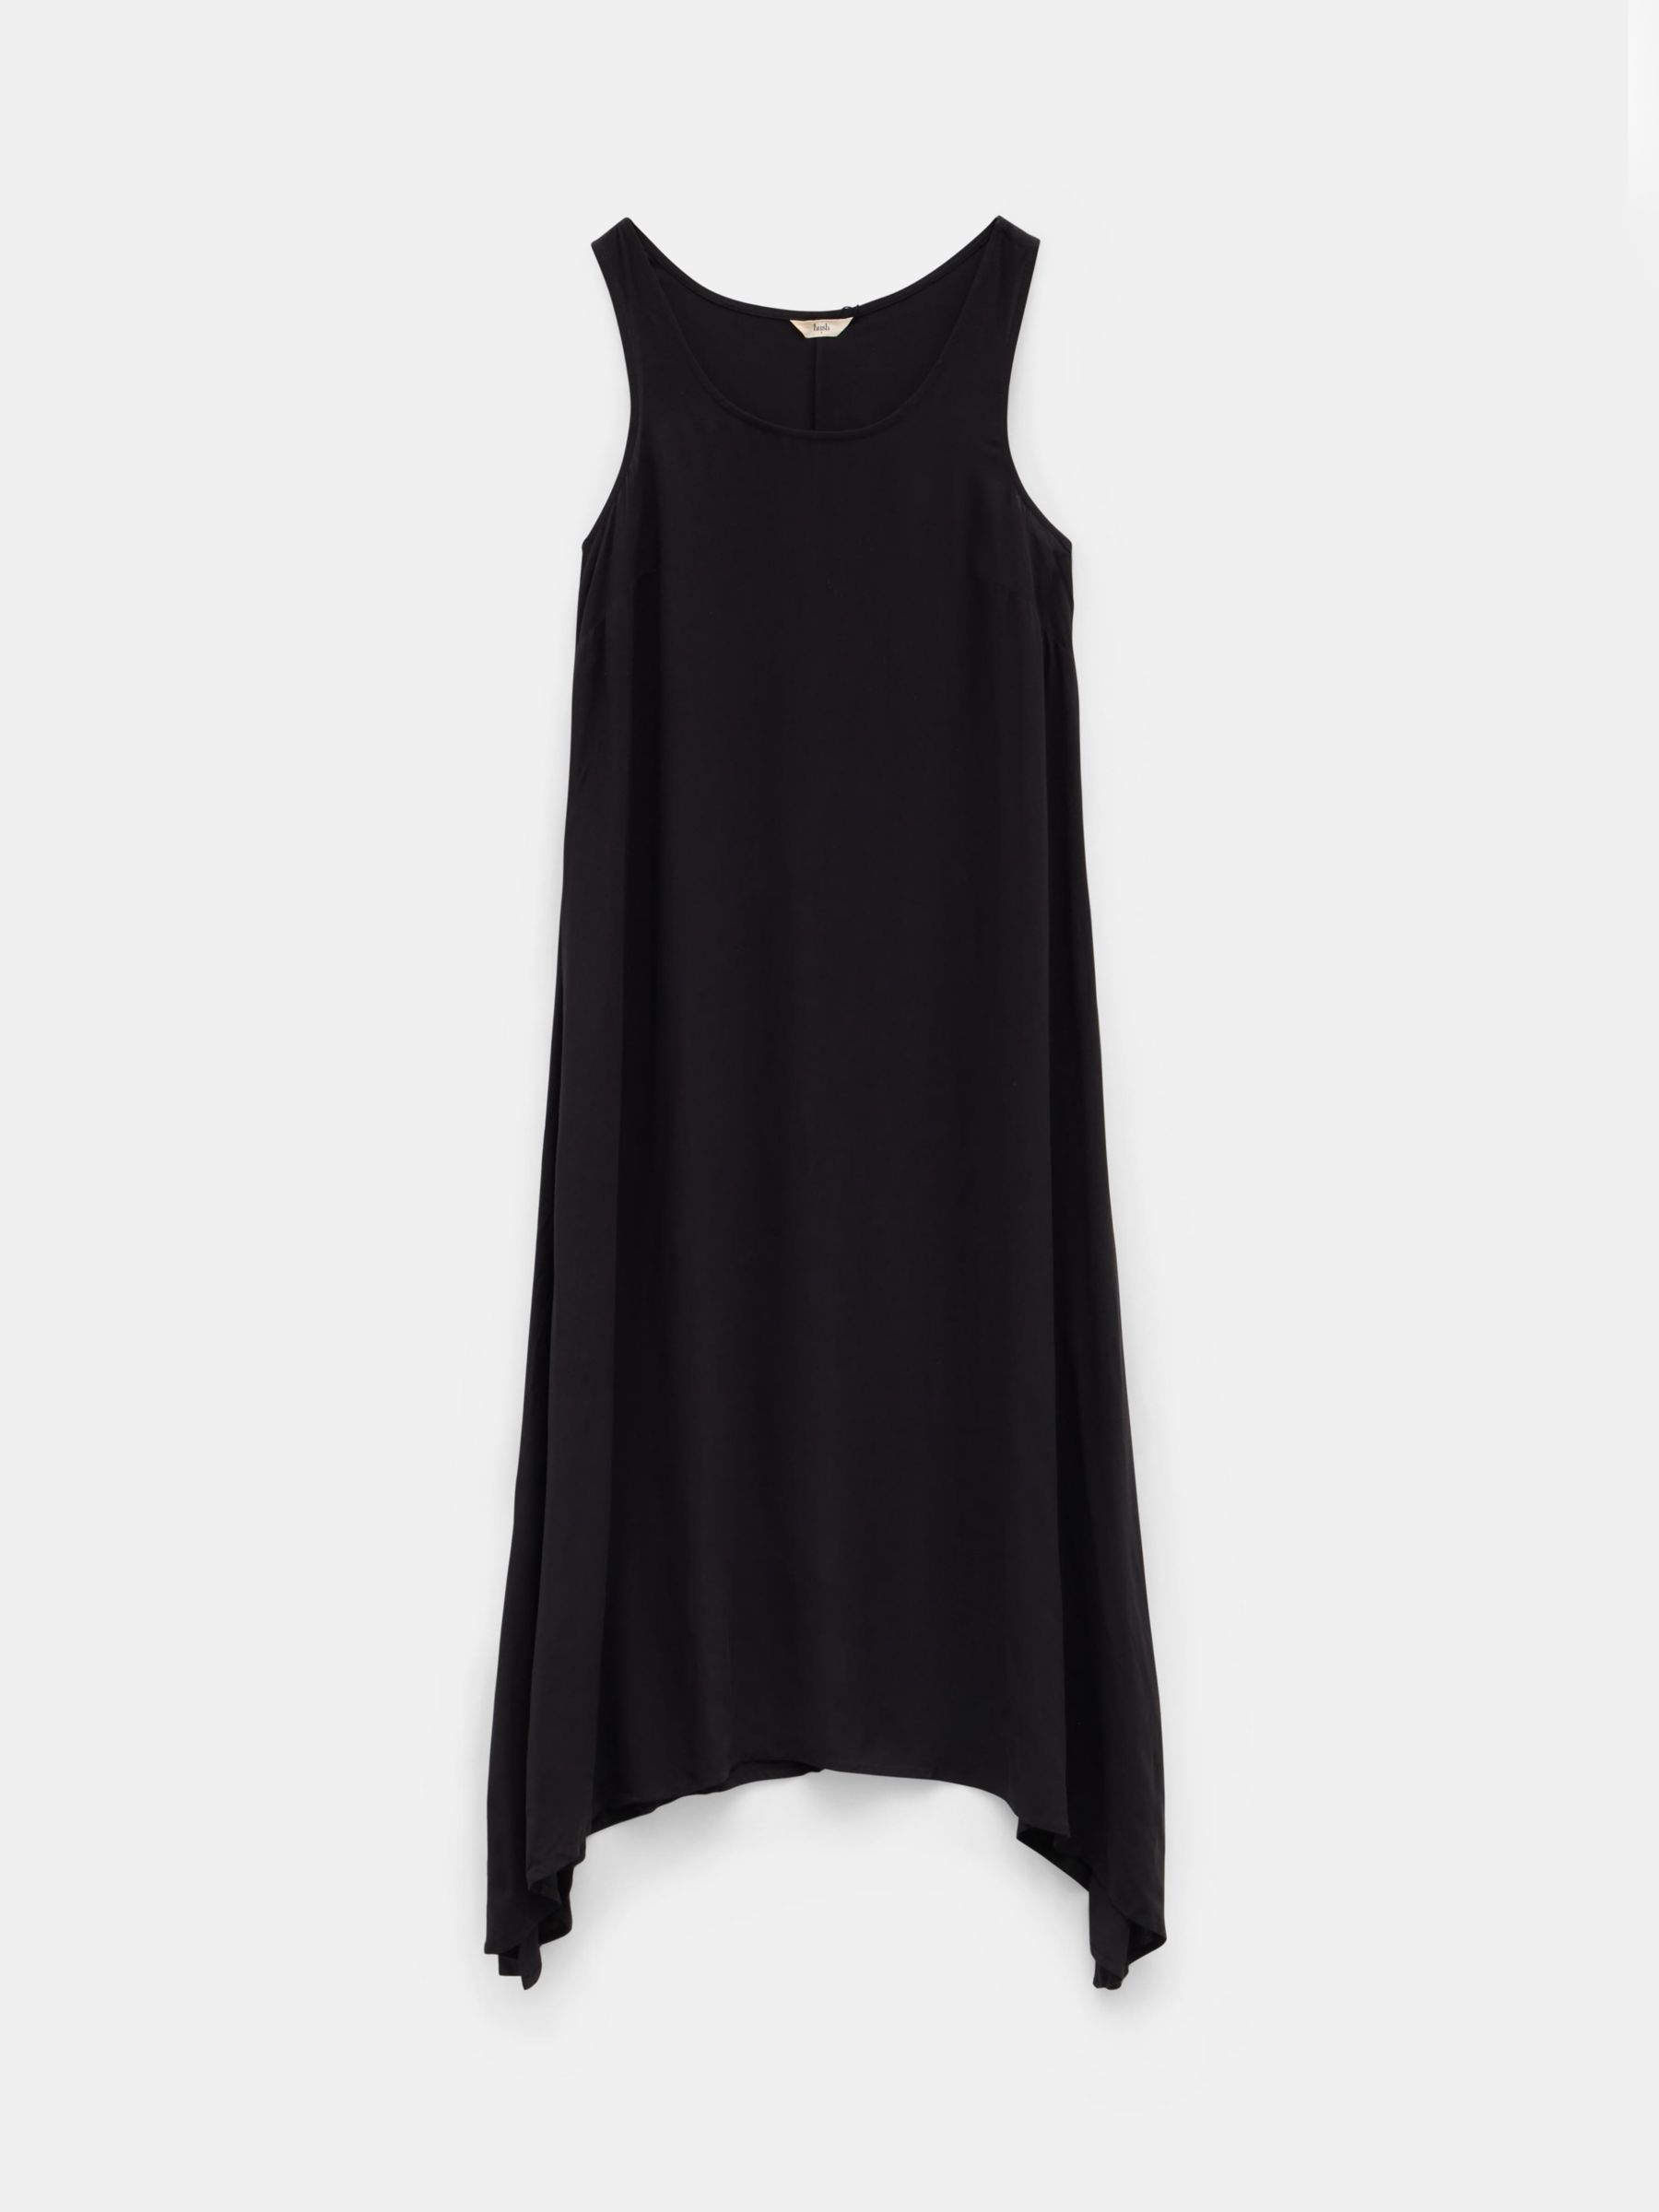 HUSH Albee Midi Dress, Black, 8